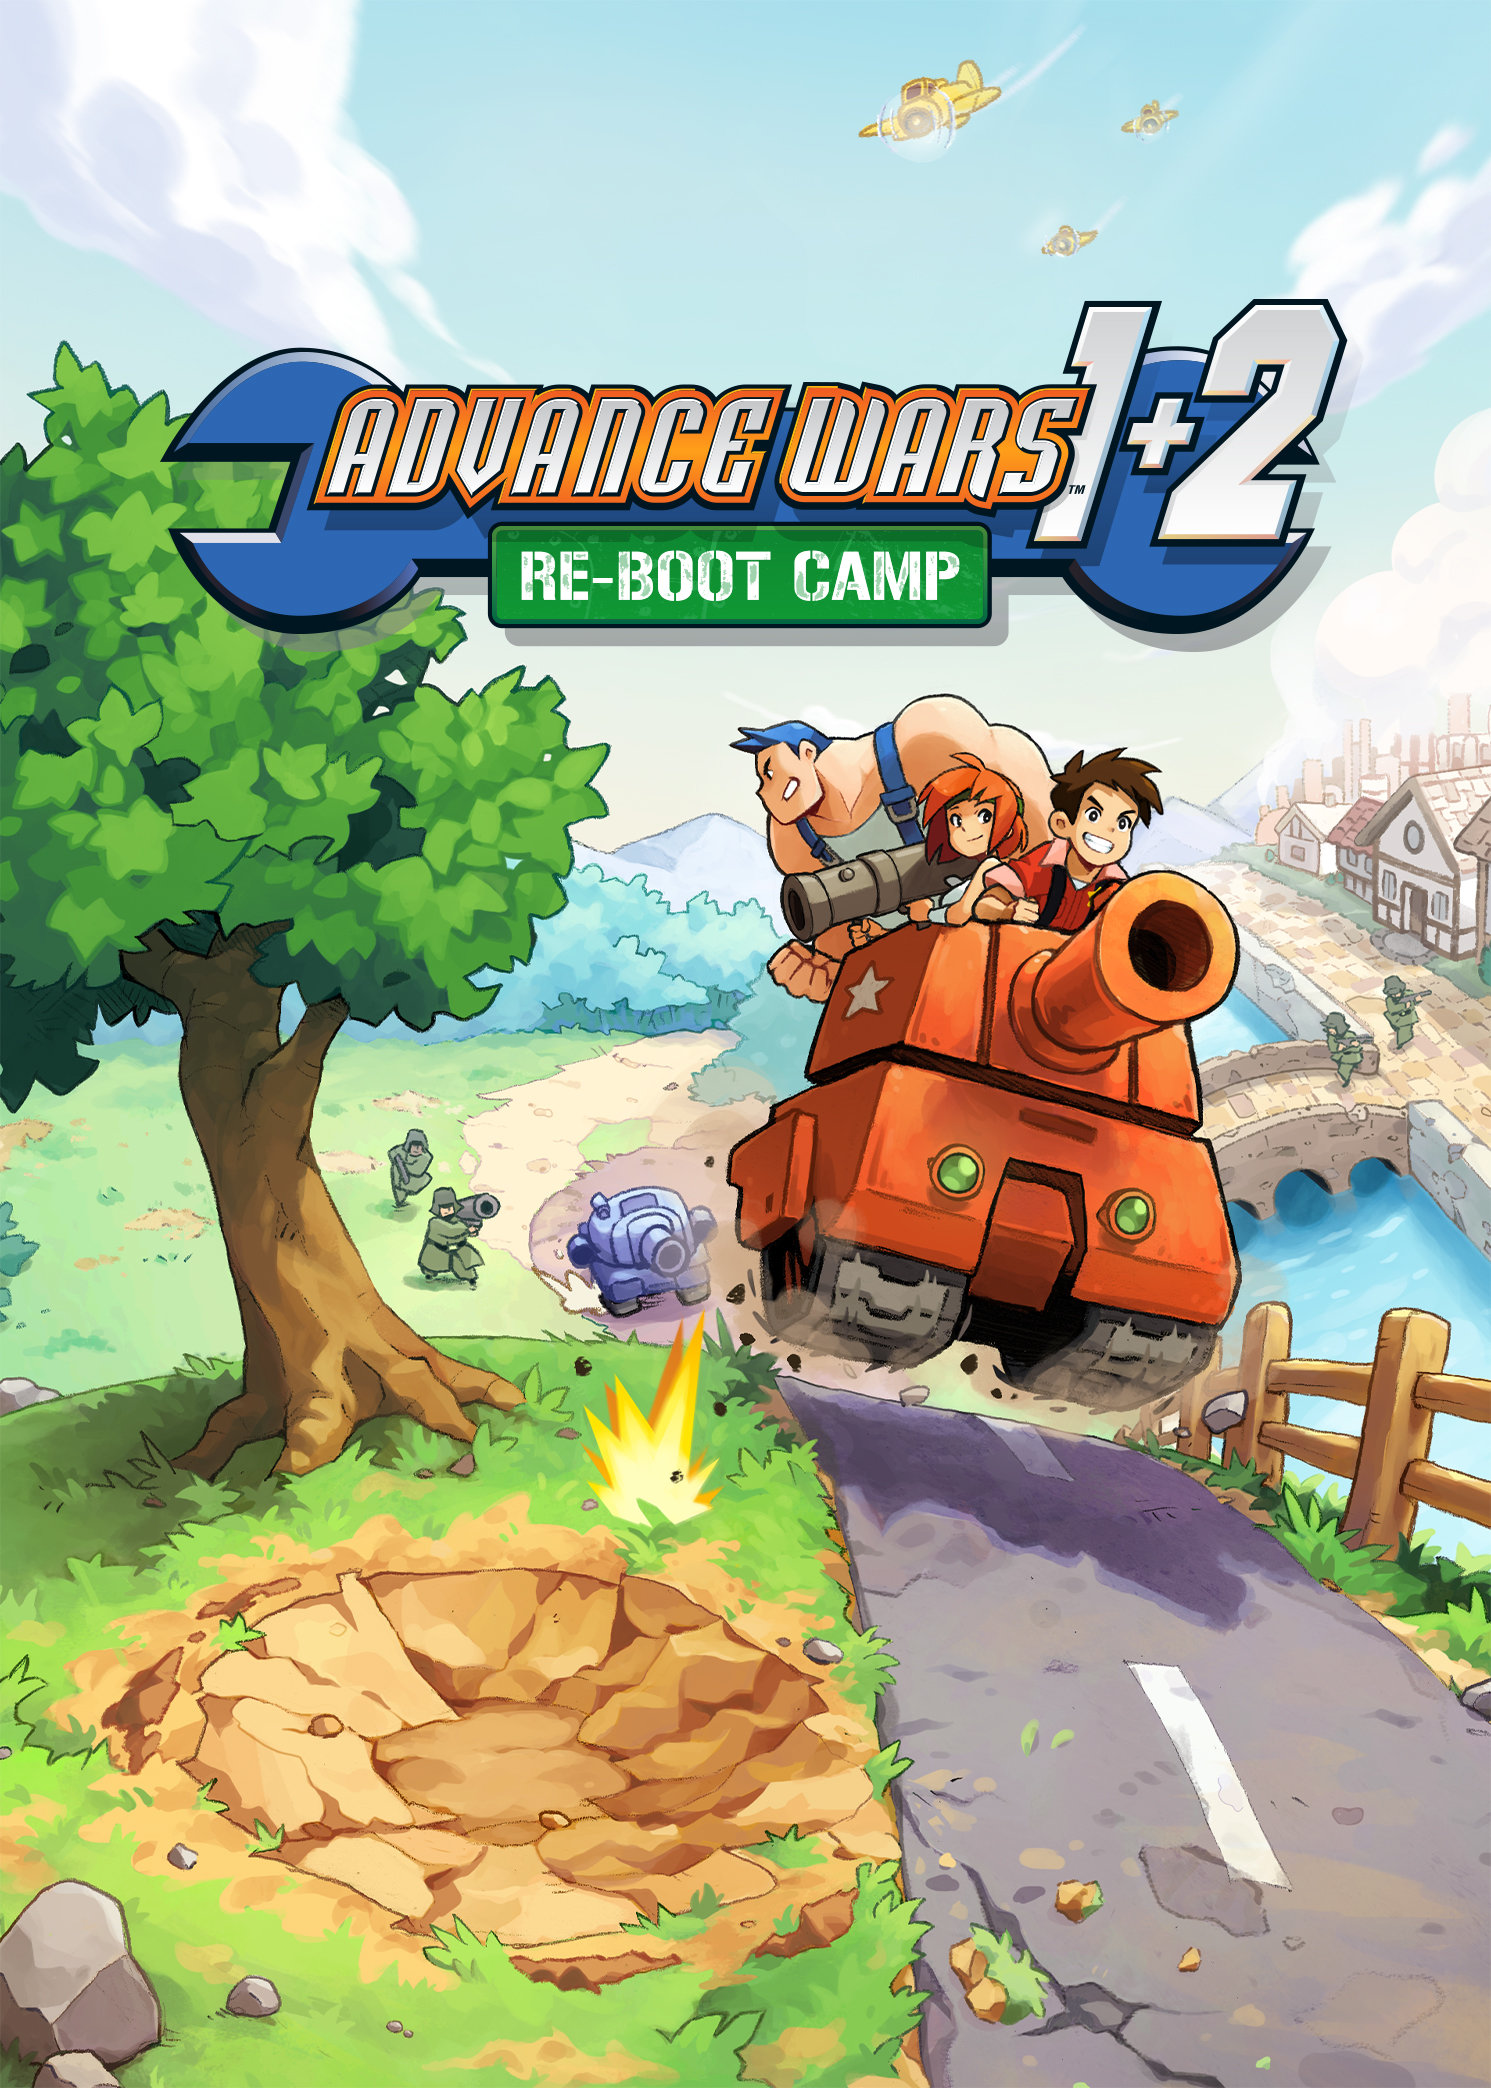 Advance wars 1+2 : Reboot Camp